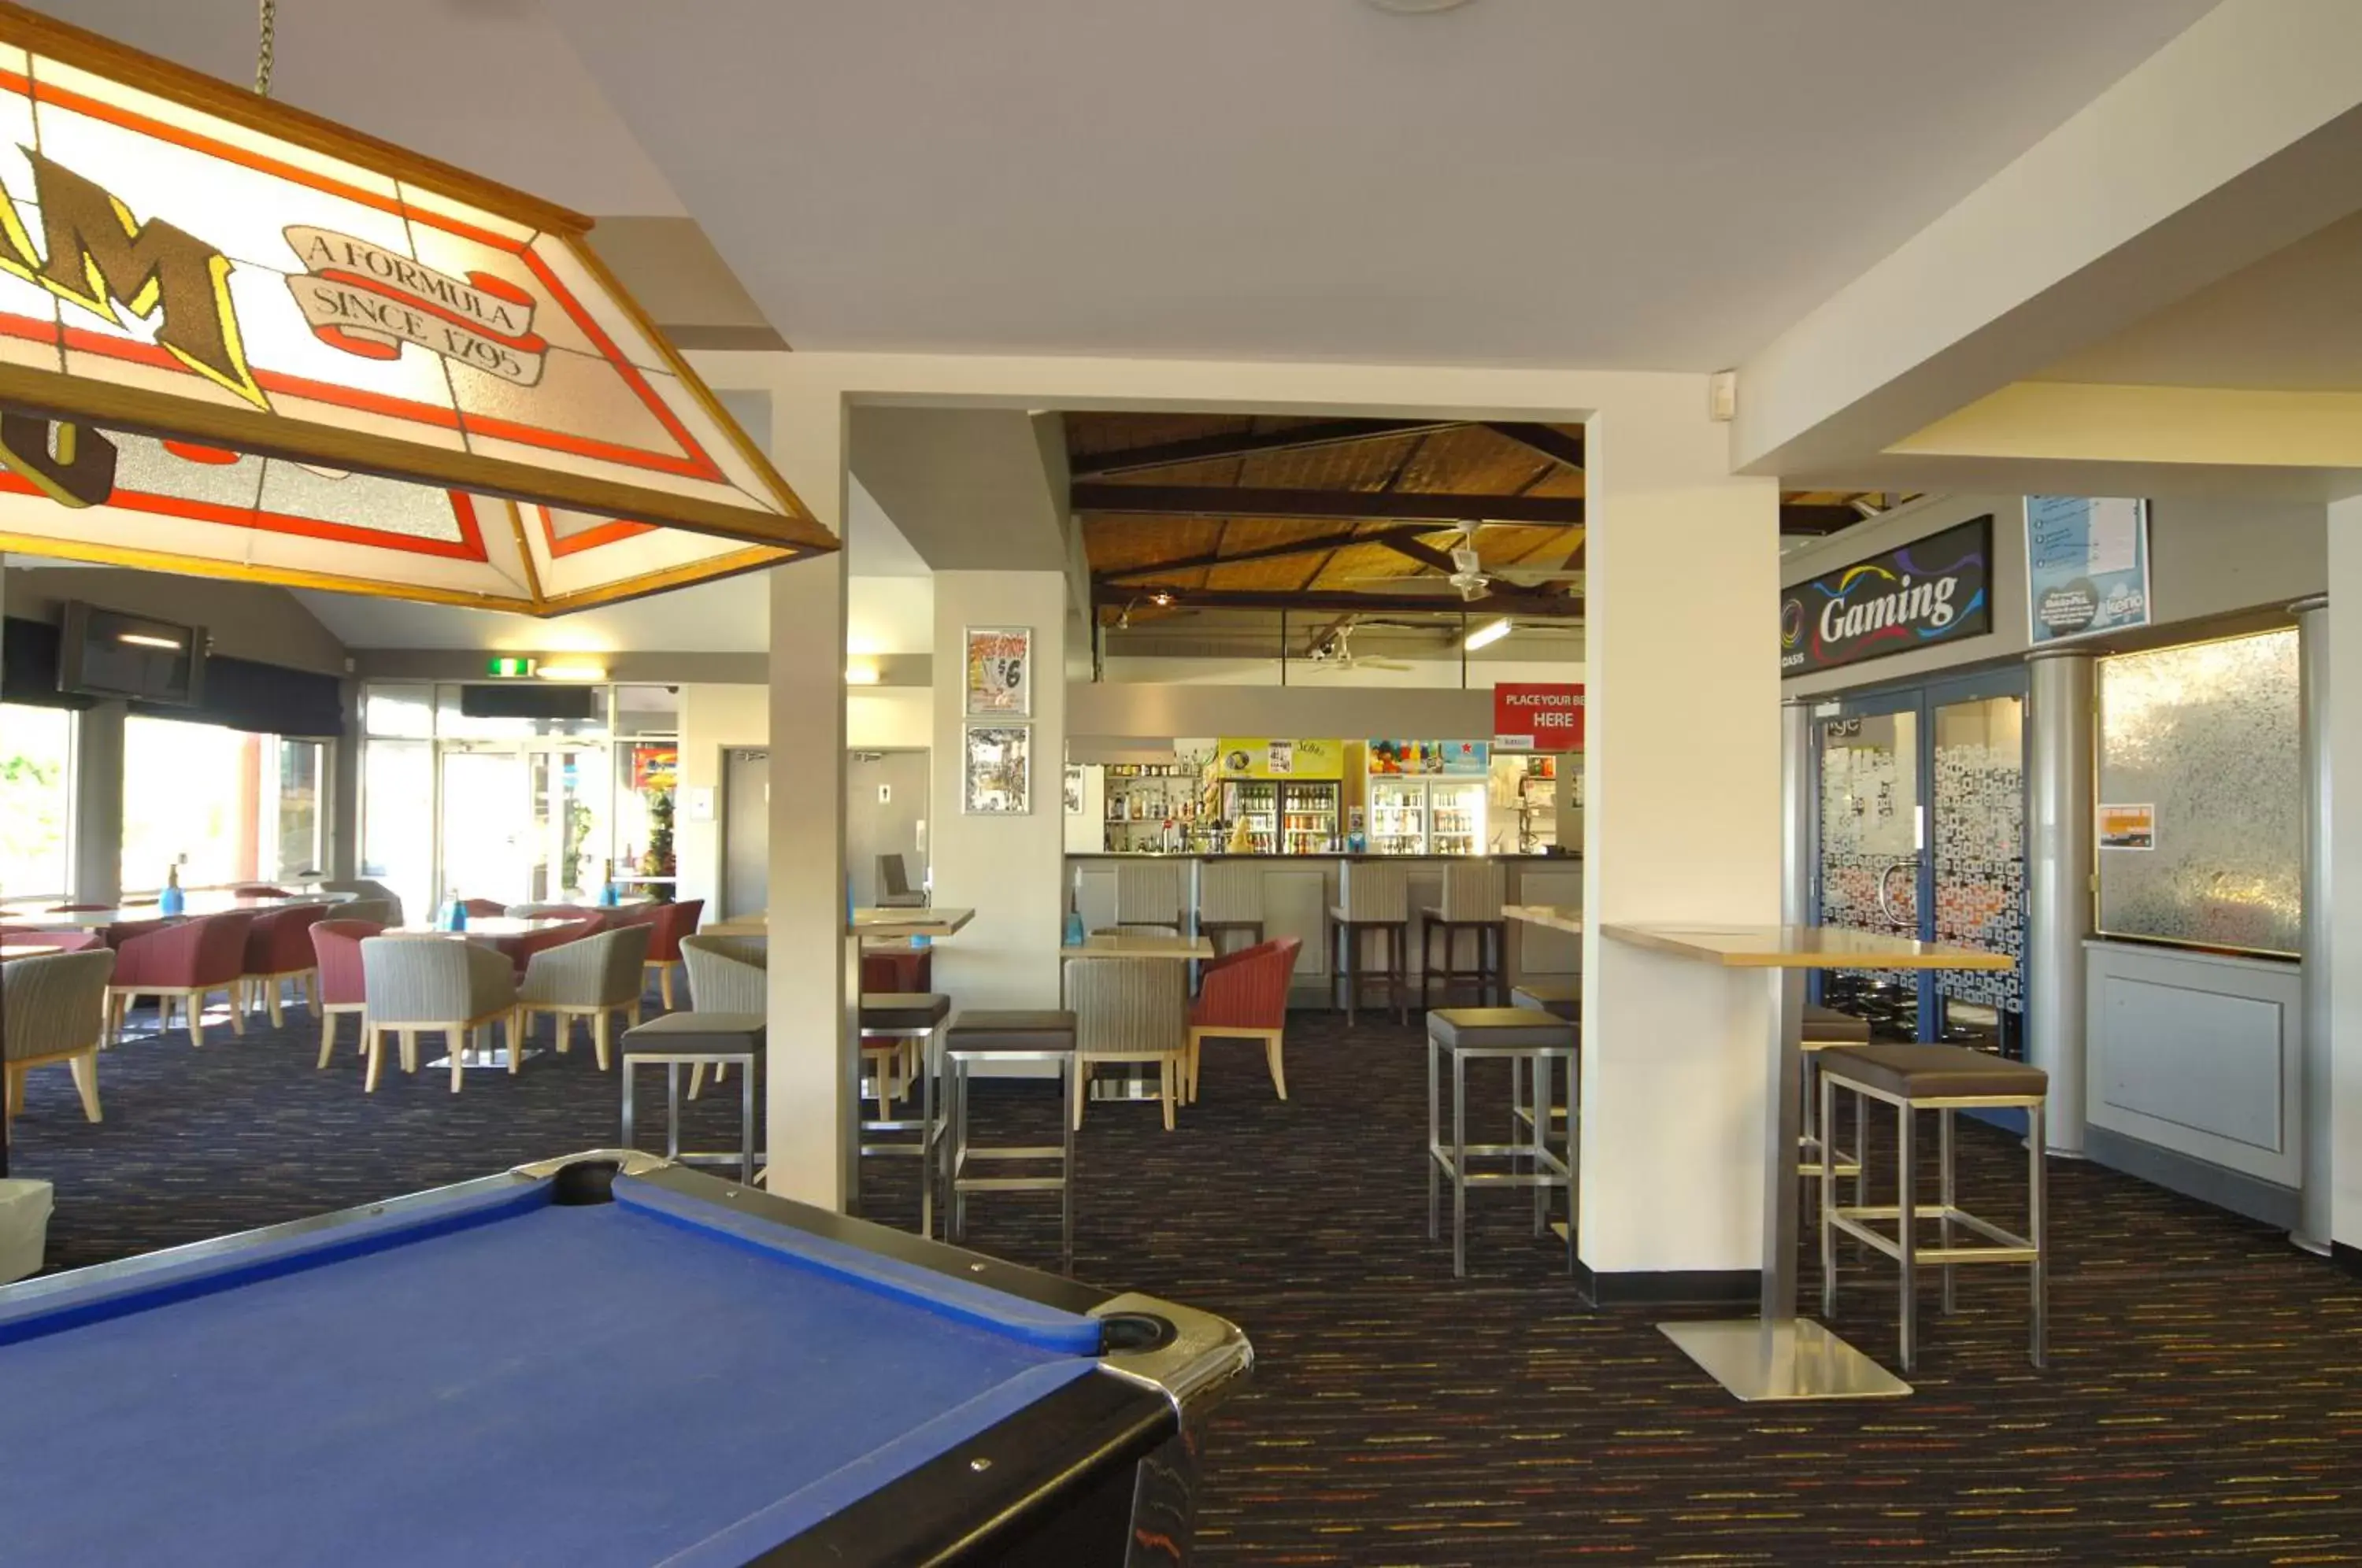 Game Room, Billiards in Argosy Motor Inn